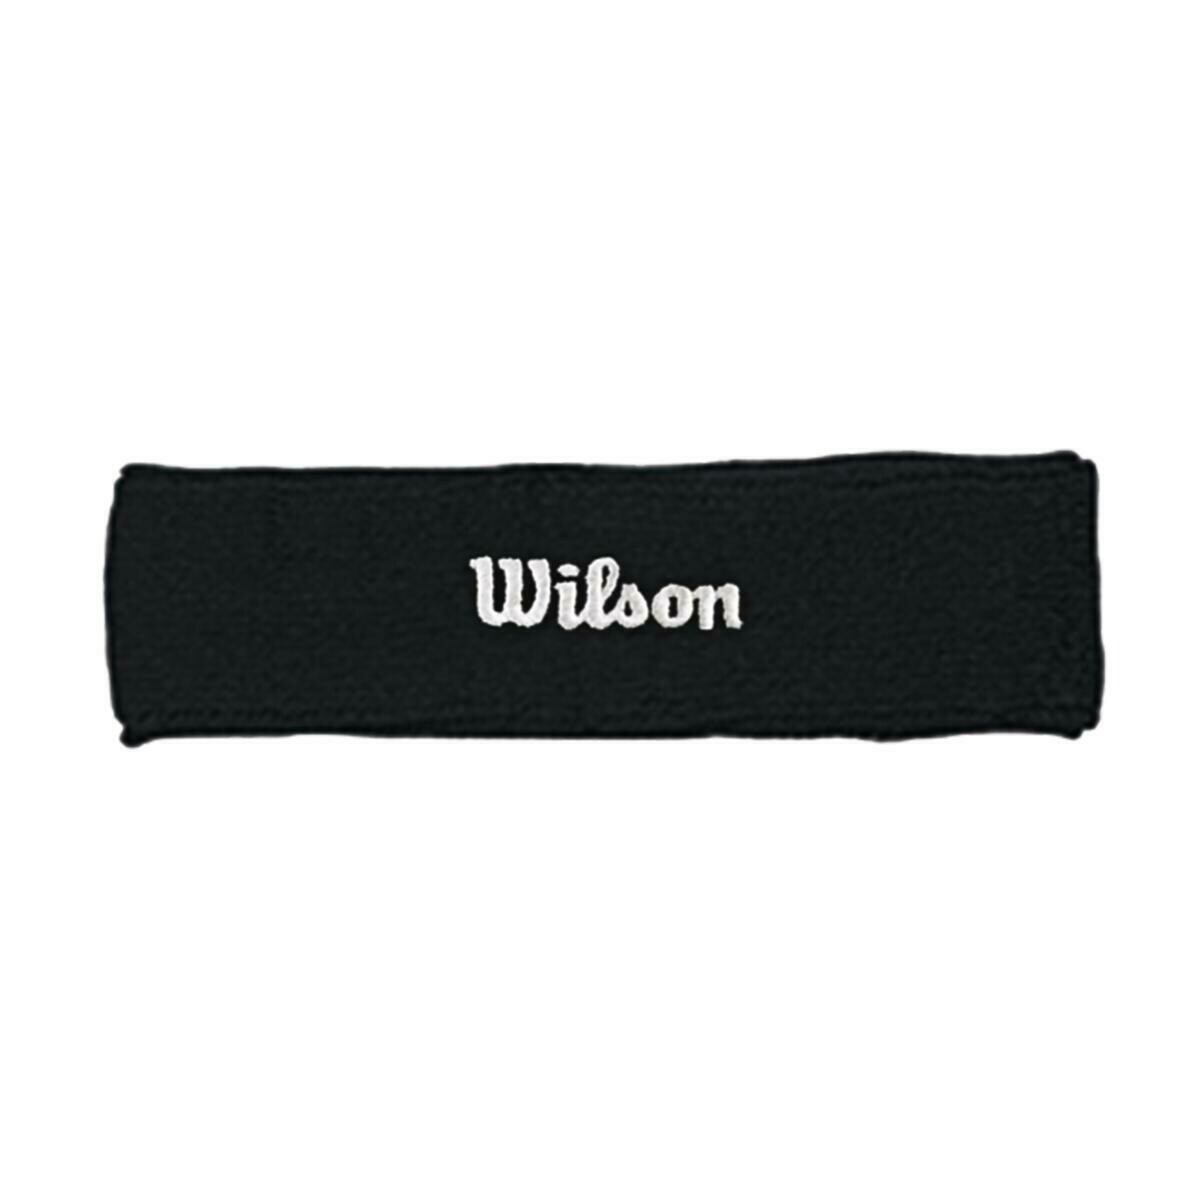 Wilson Headband - Black